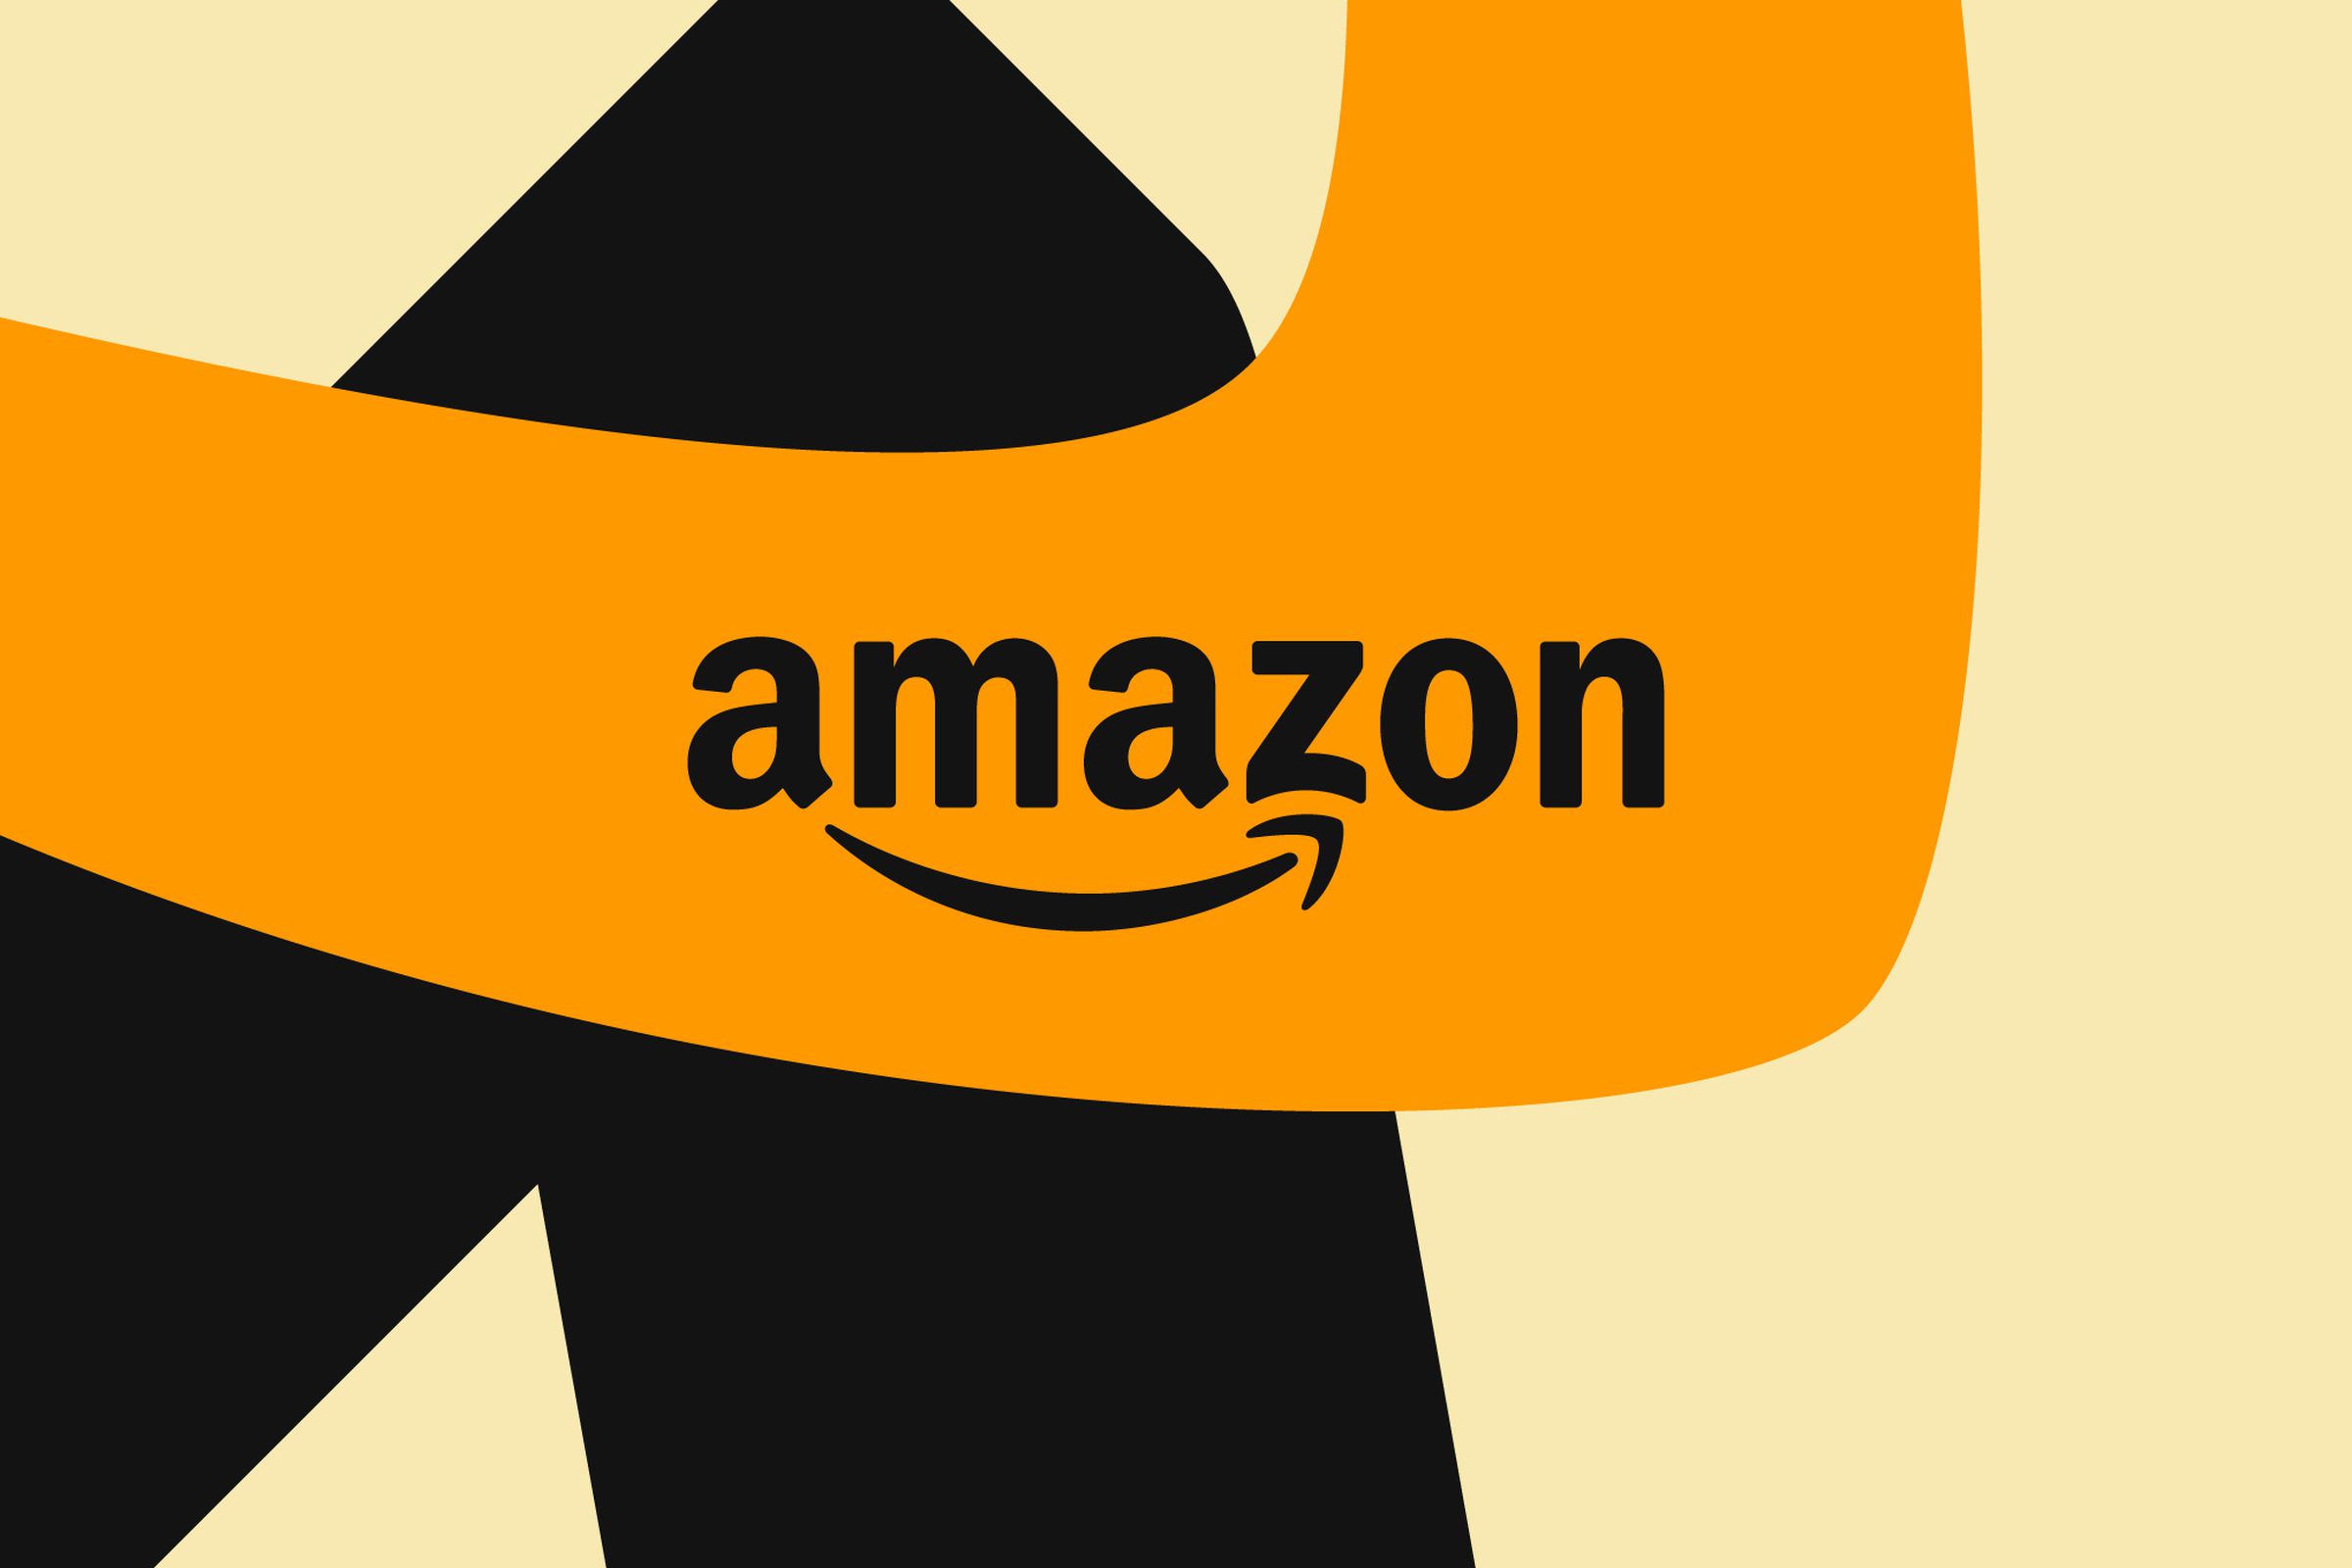 Ilustrasi logo Amazon dengan latar belakang oranye, hitam, dan cokelat yang terdiri dari garis-garis yang saling tumpang tindih.